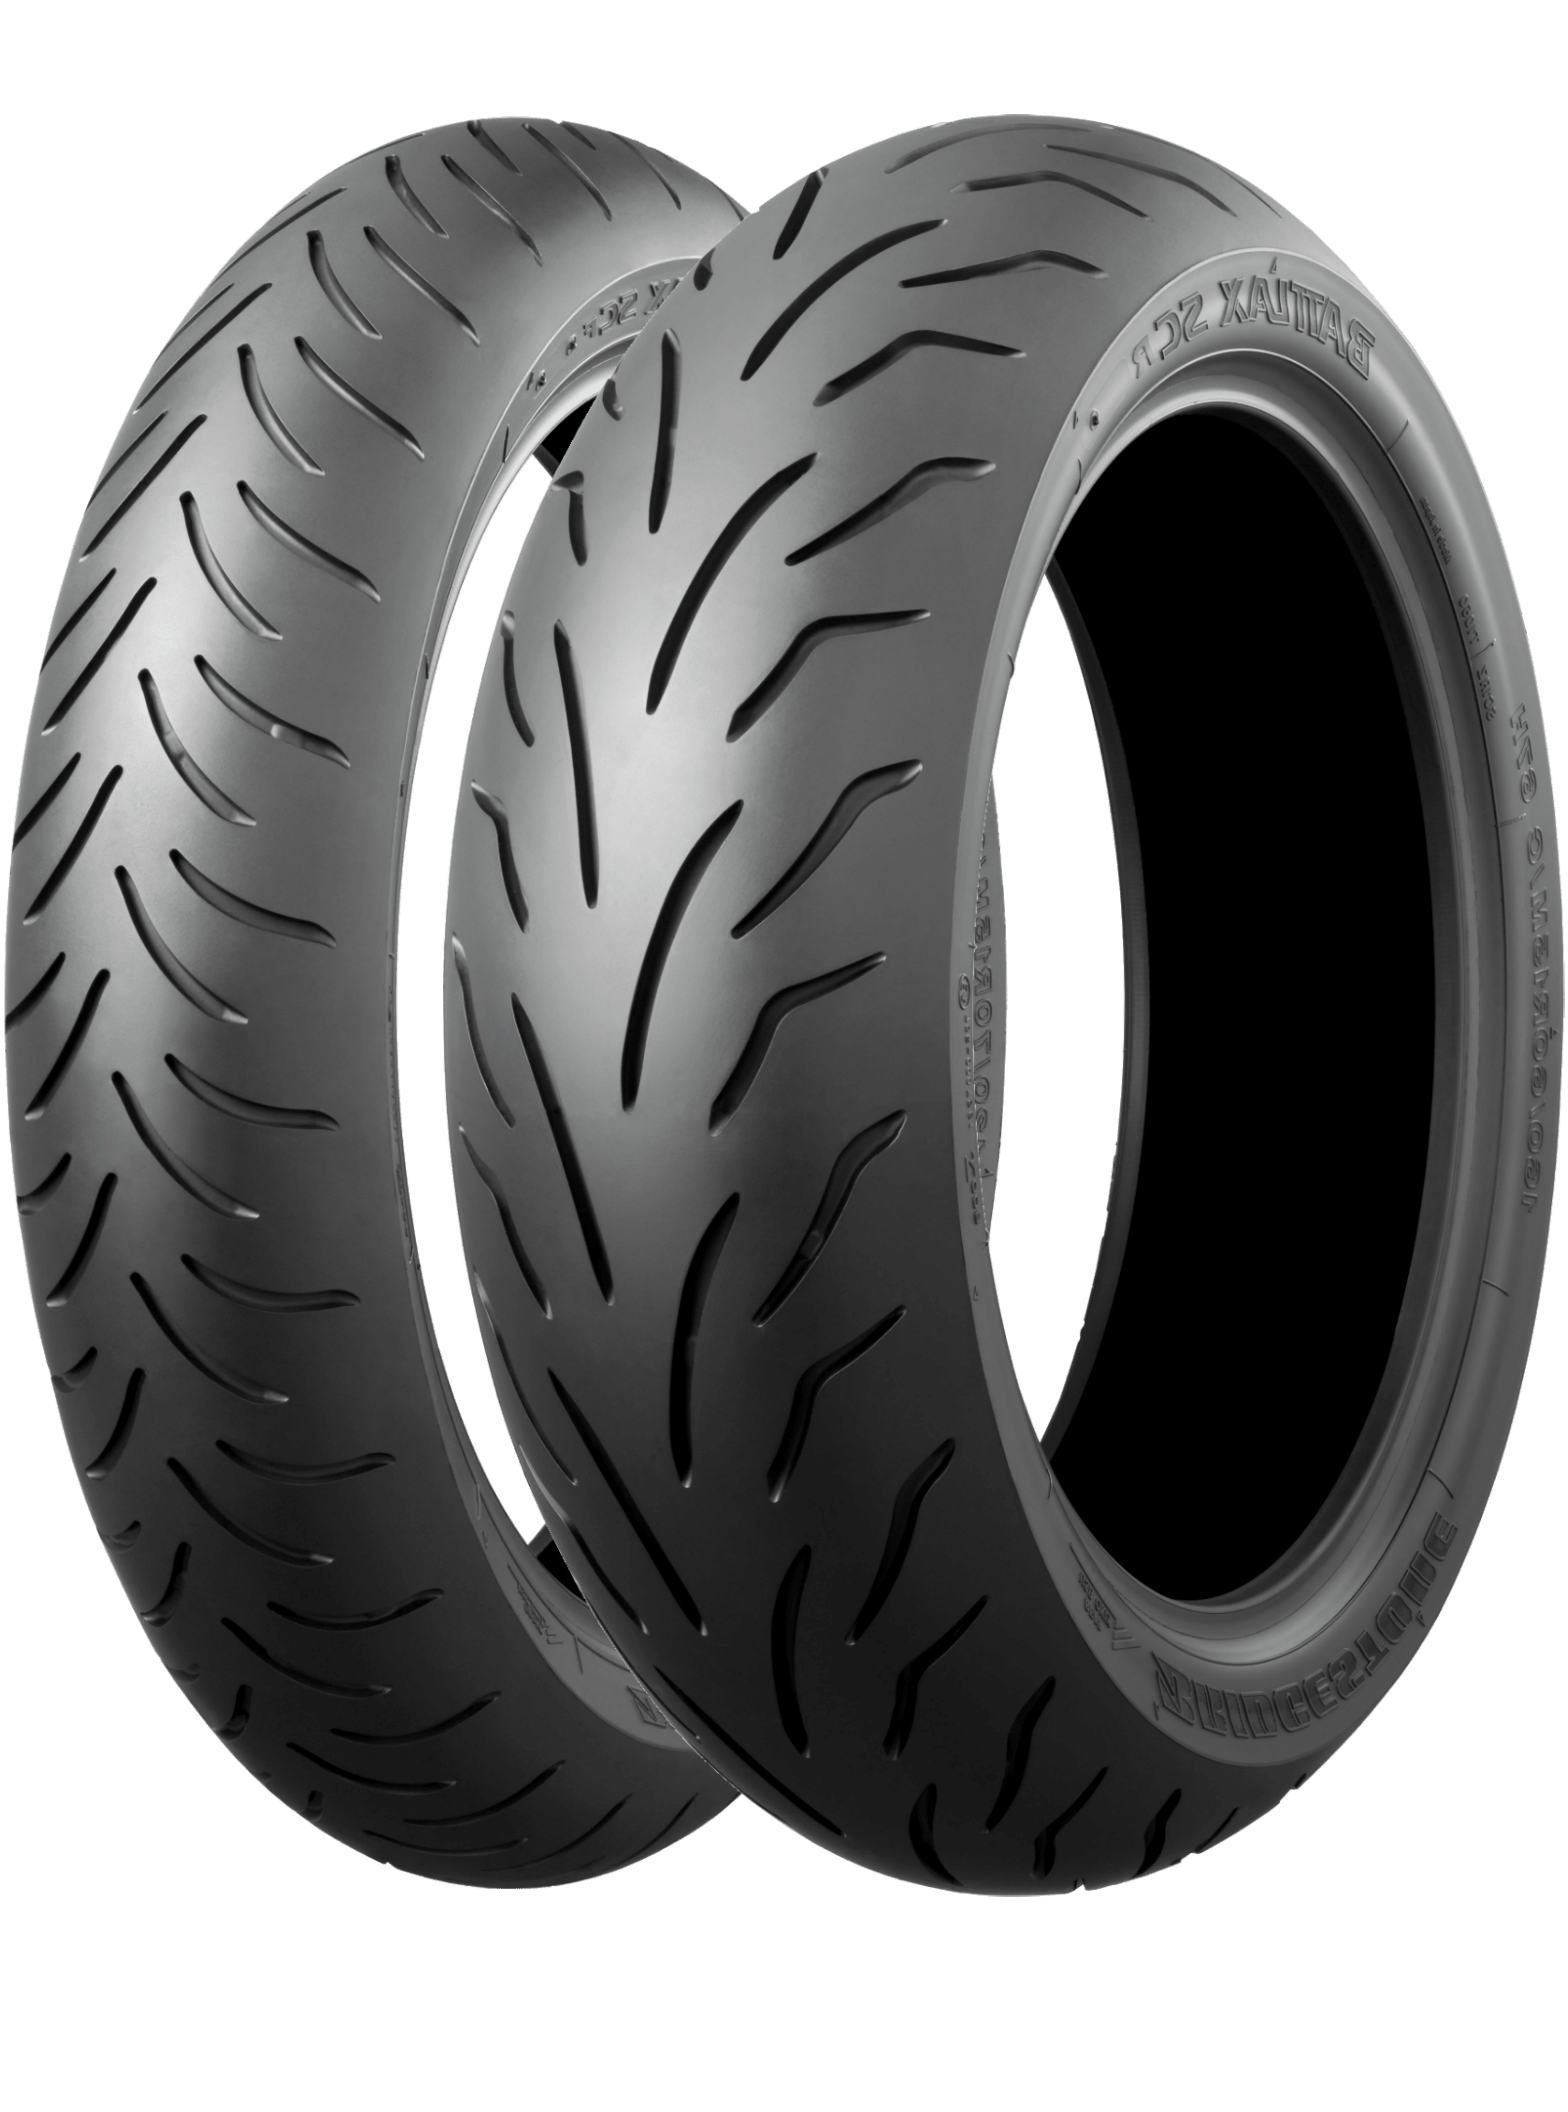 Bridgestone Battlax SC - Tire Reviews and Tests